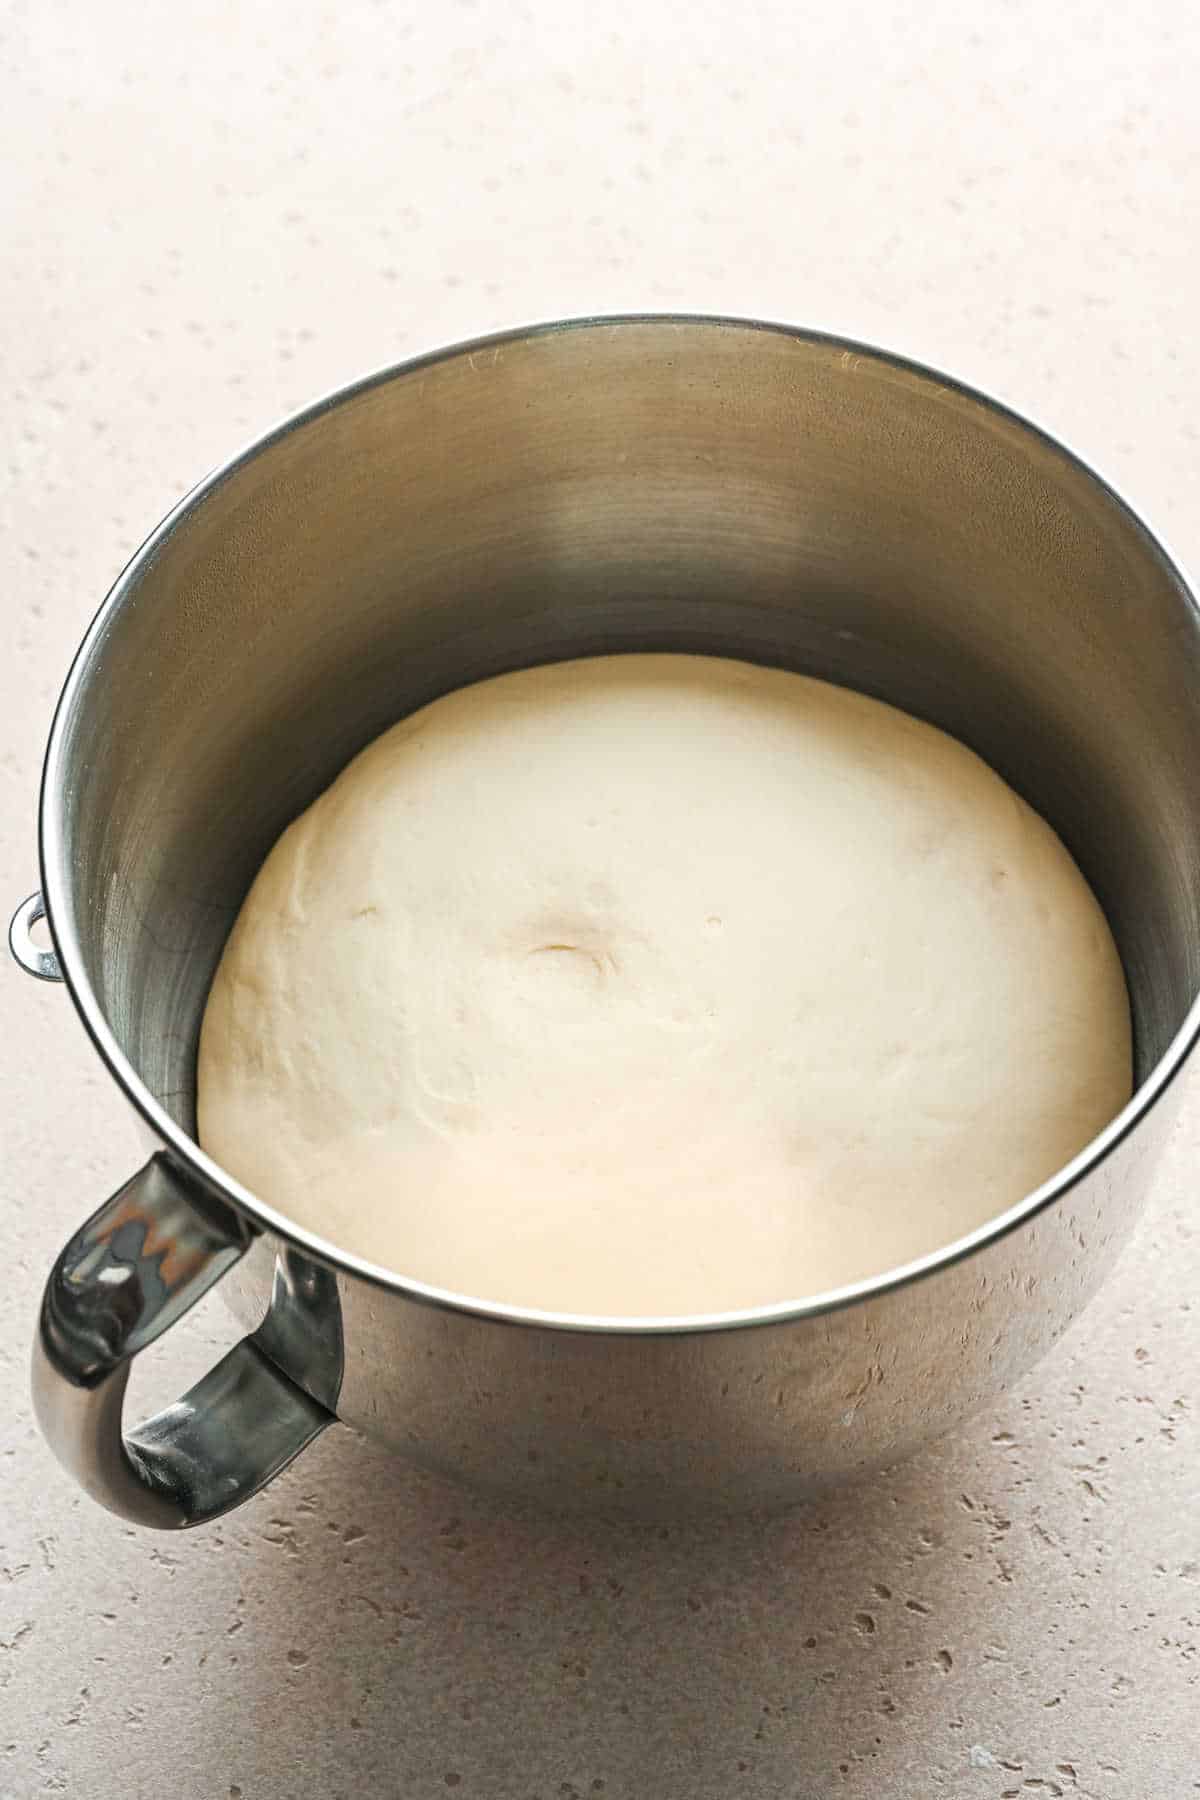 Cinnamon breadstick dough in a silver mixing bowl. 